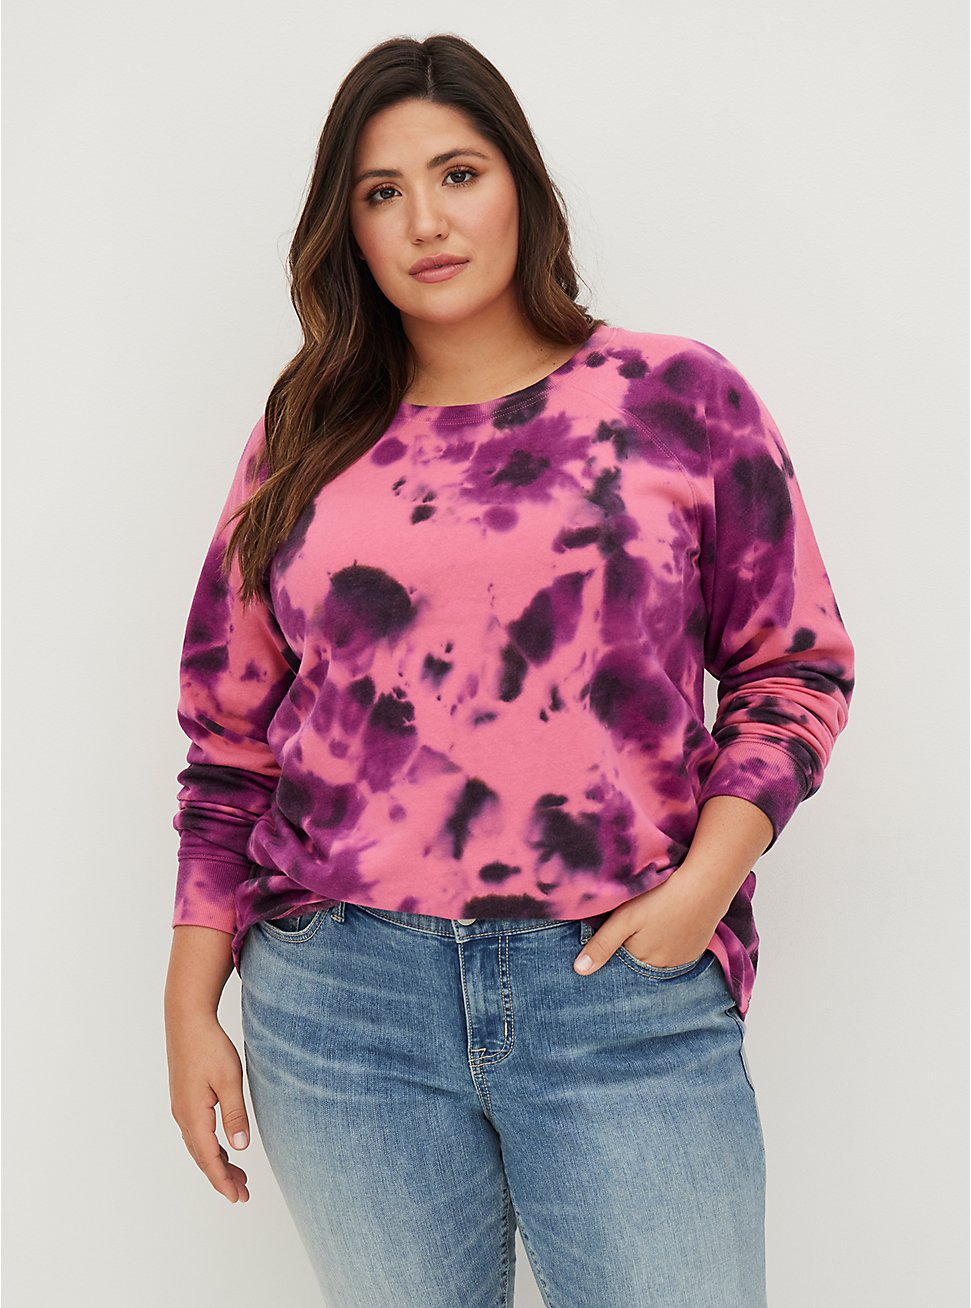 Tunic Sweatshirt - Cozy Fleece Tie-Dye Pink, OTHER PRINTS, hi-res